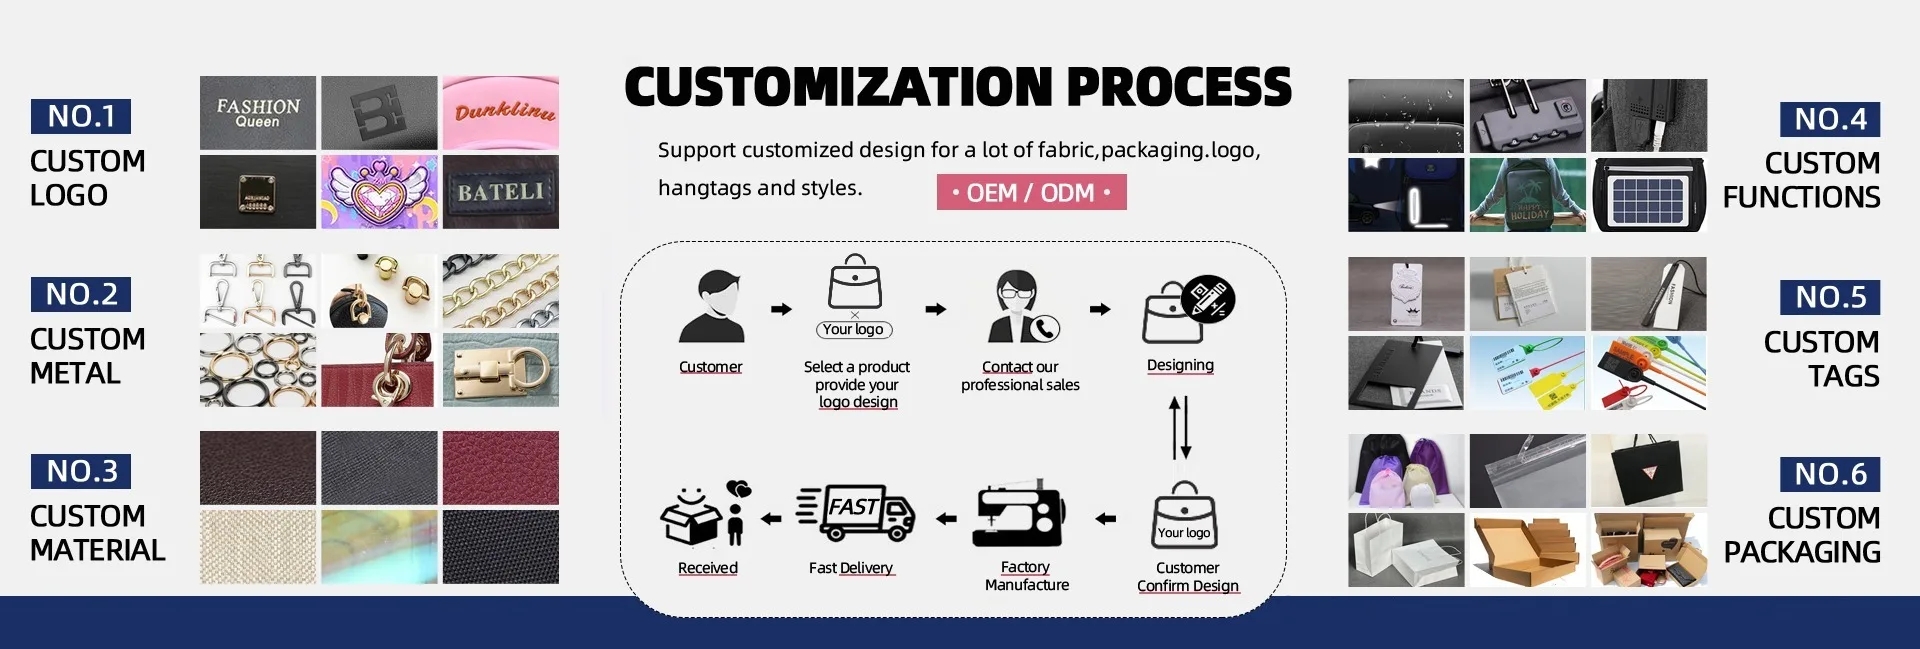 Customized Processes